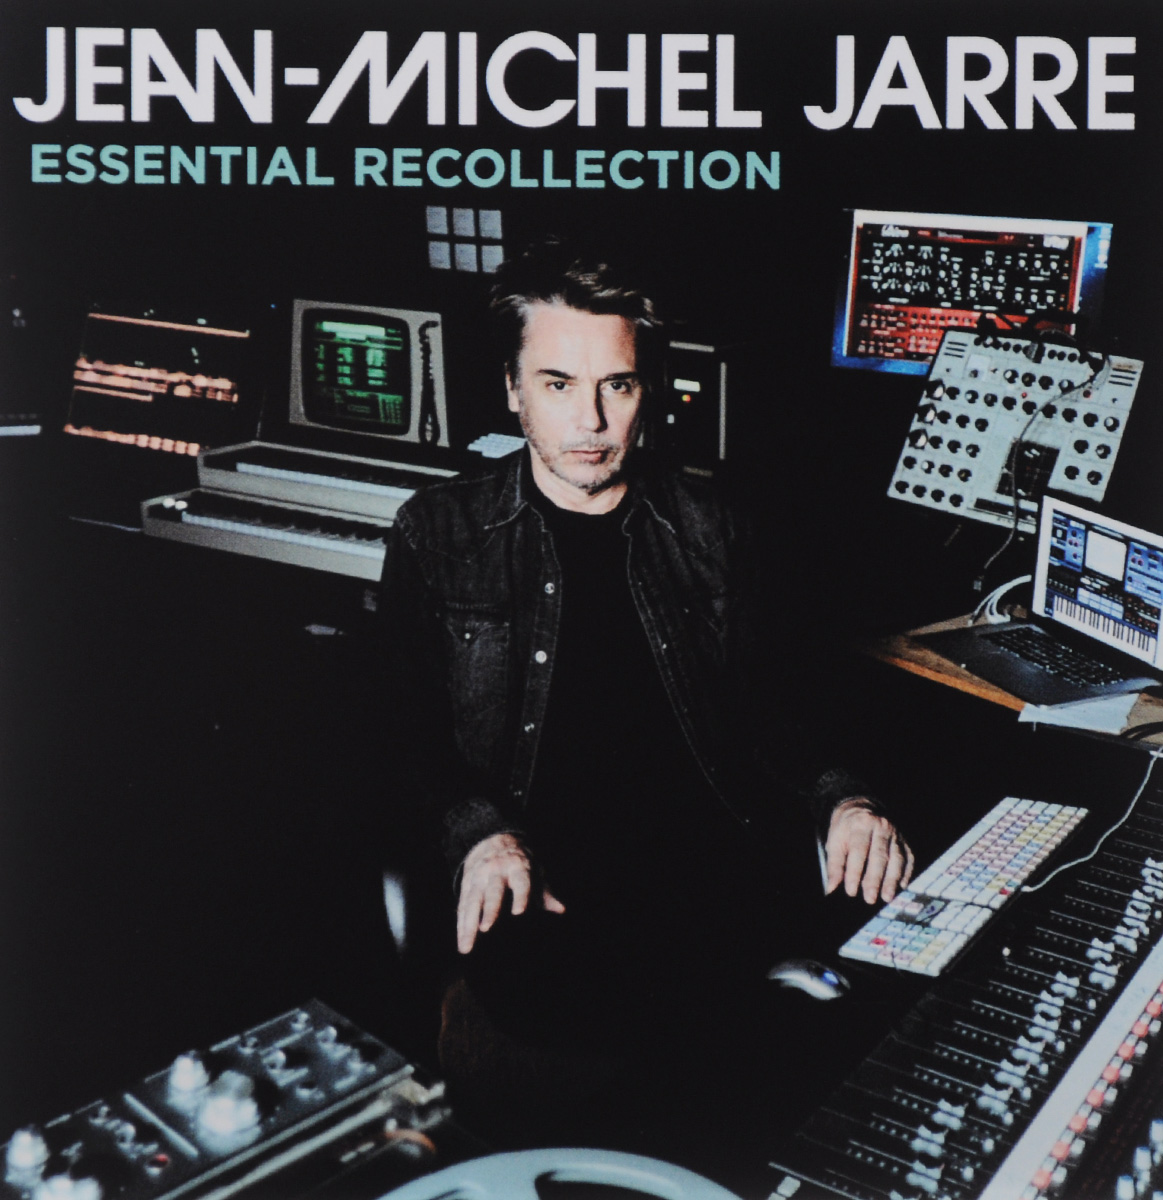 Jean-Michel Jarre. Essential Recollection